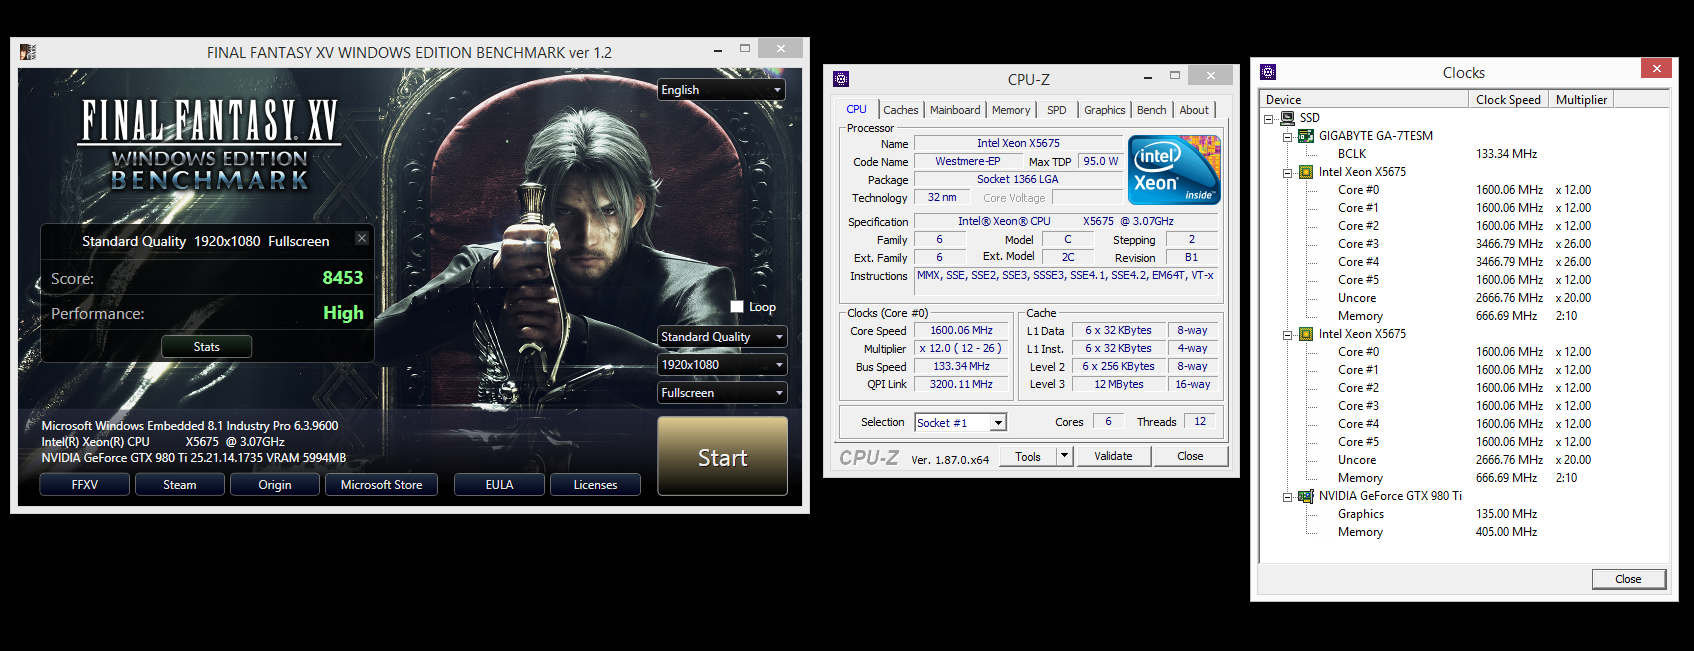 natr0n Final Fantasy XV Benchmark dual xeon 5675 with 980ti.PNG